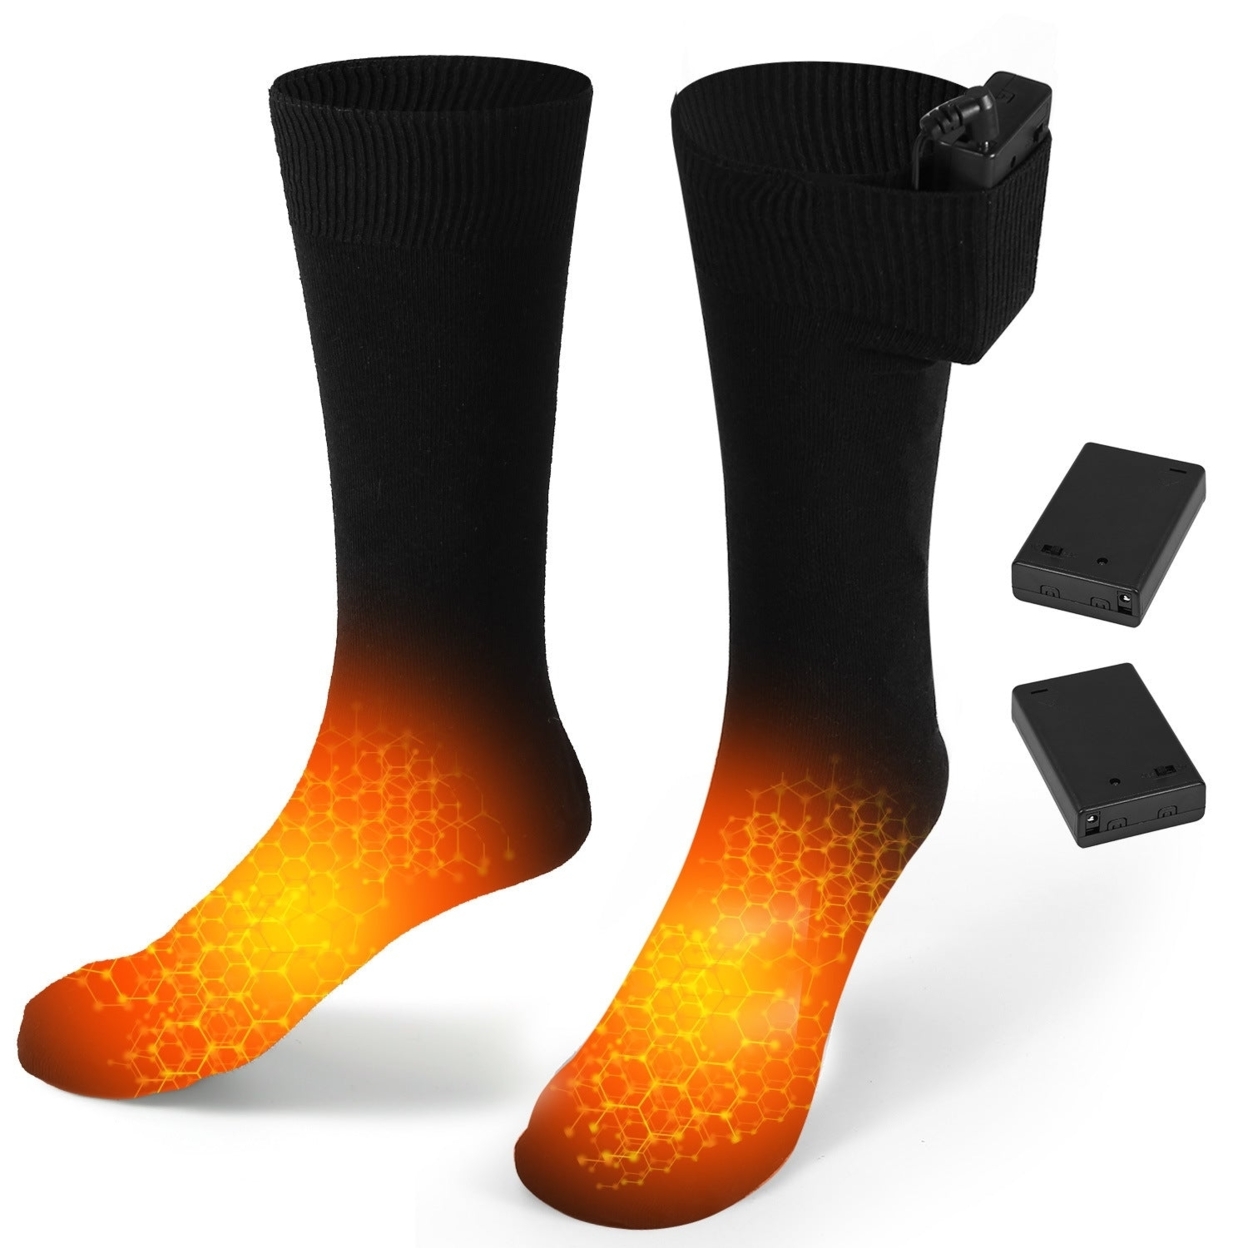 SKUSHOPS Electric Heated Socks Rechargeable Battery Heated Socks Winter Warm Thermal Socks